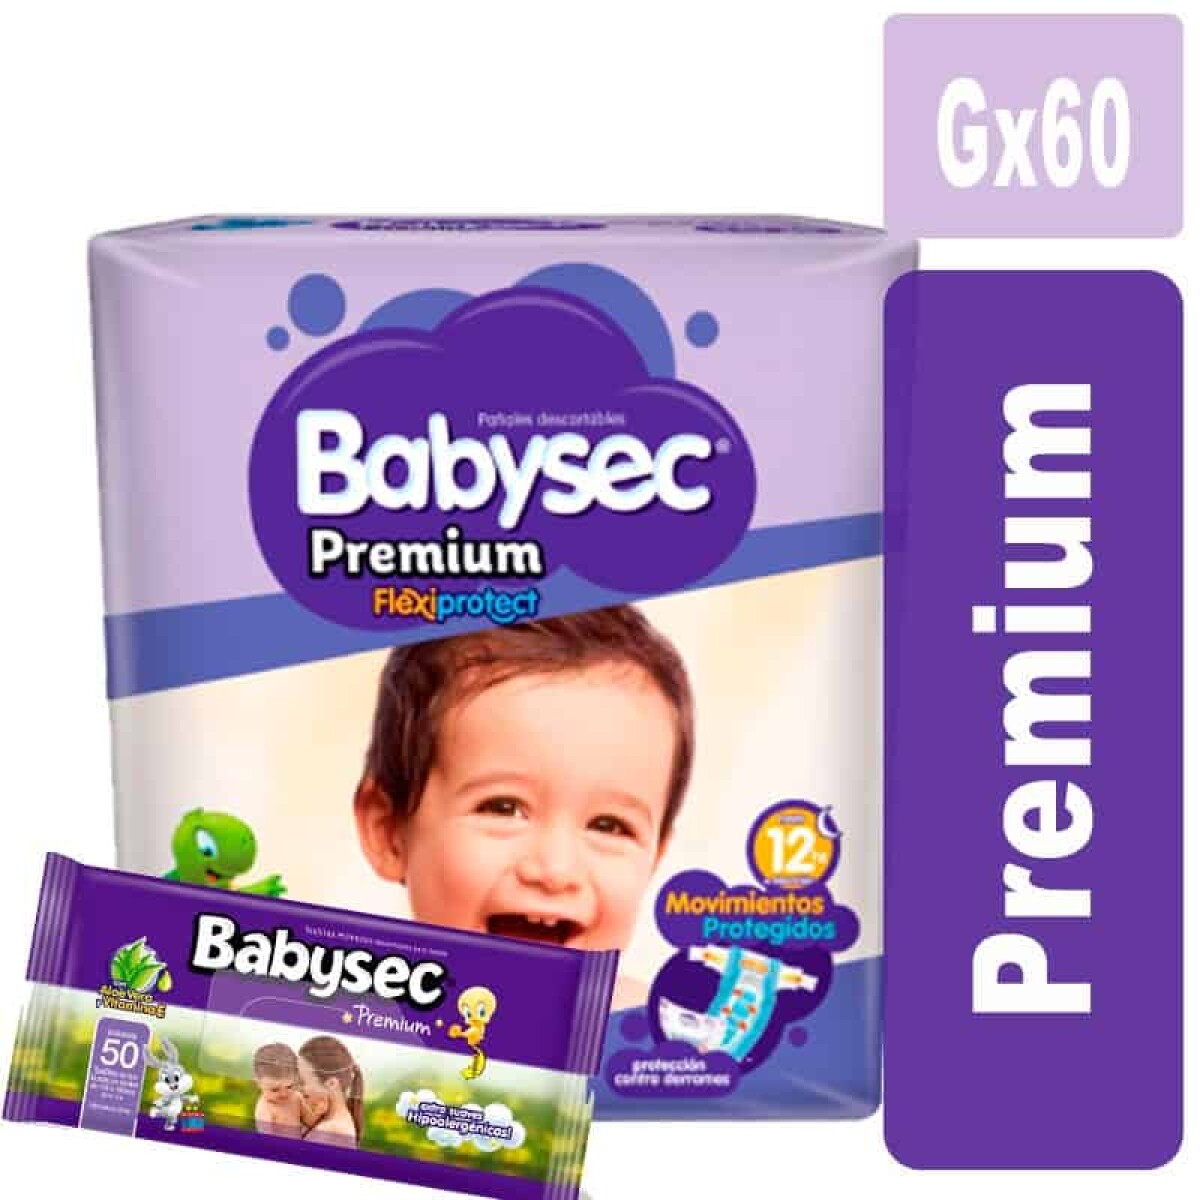 Pañales Babysec Premium G X 60 